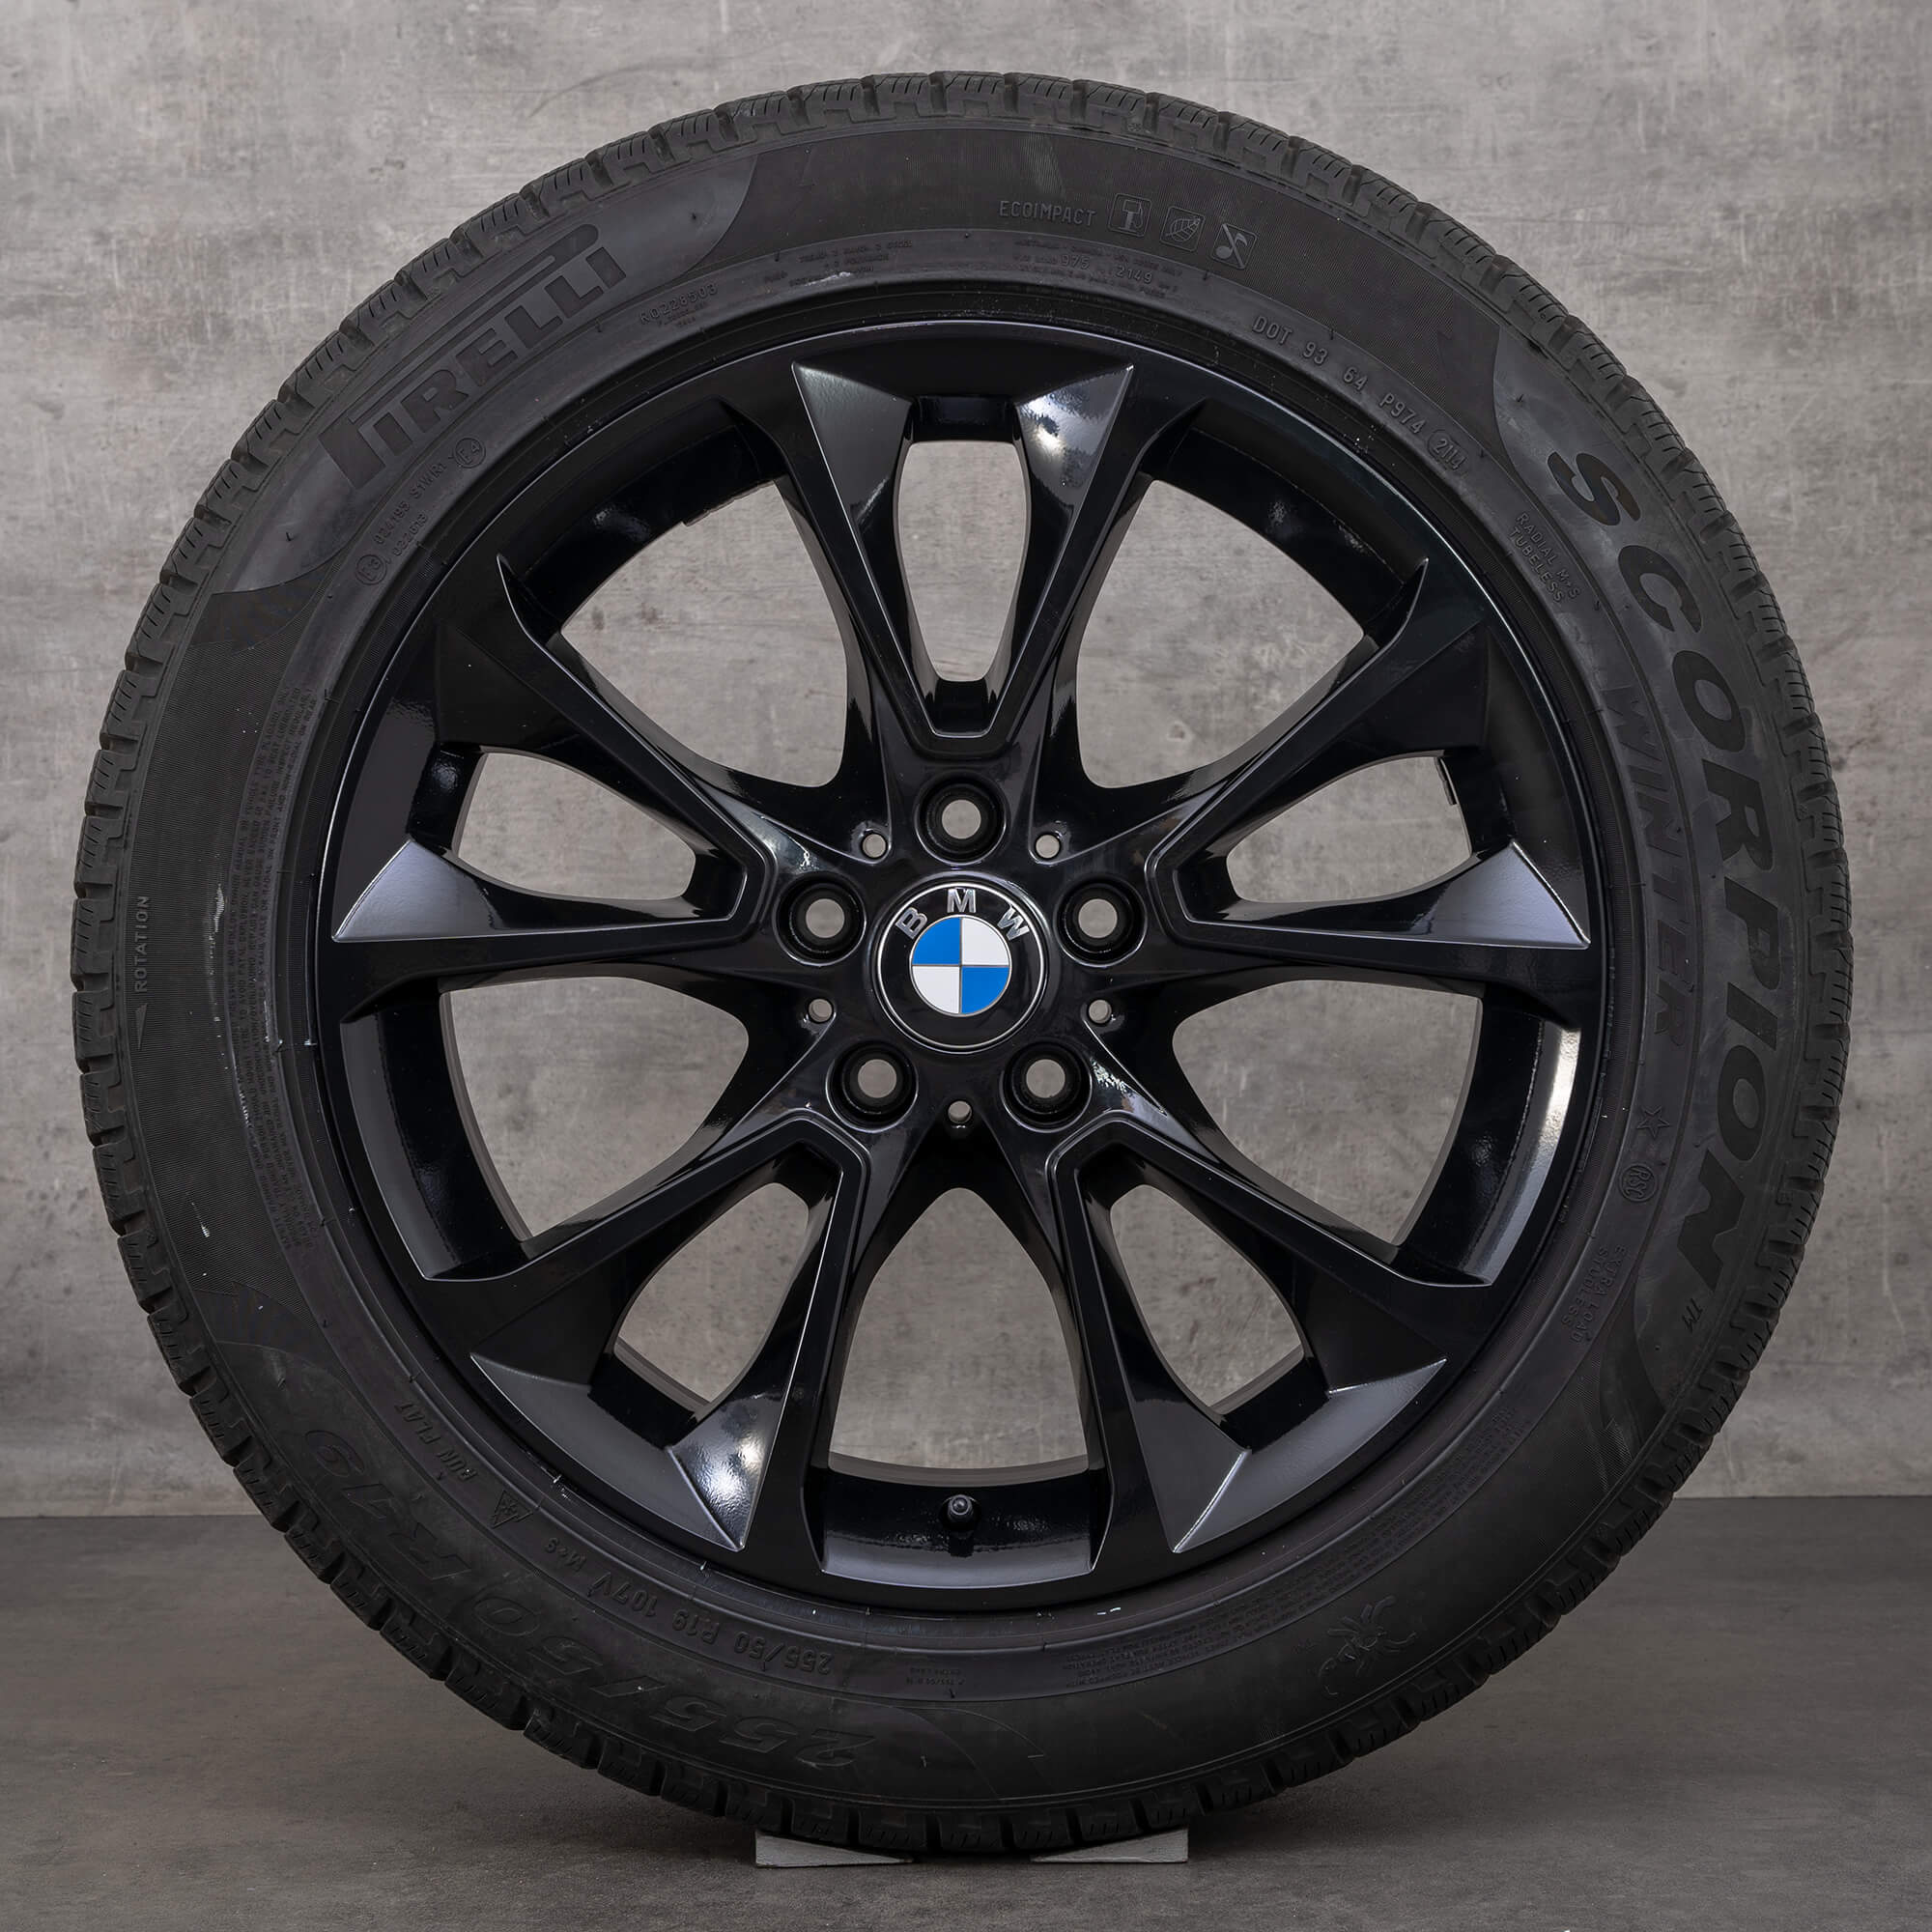 BMW 19 inch rim X5 E70 F15 winter tires wheels styling 449 6853955